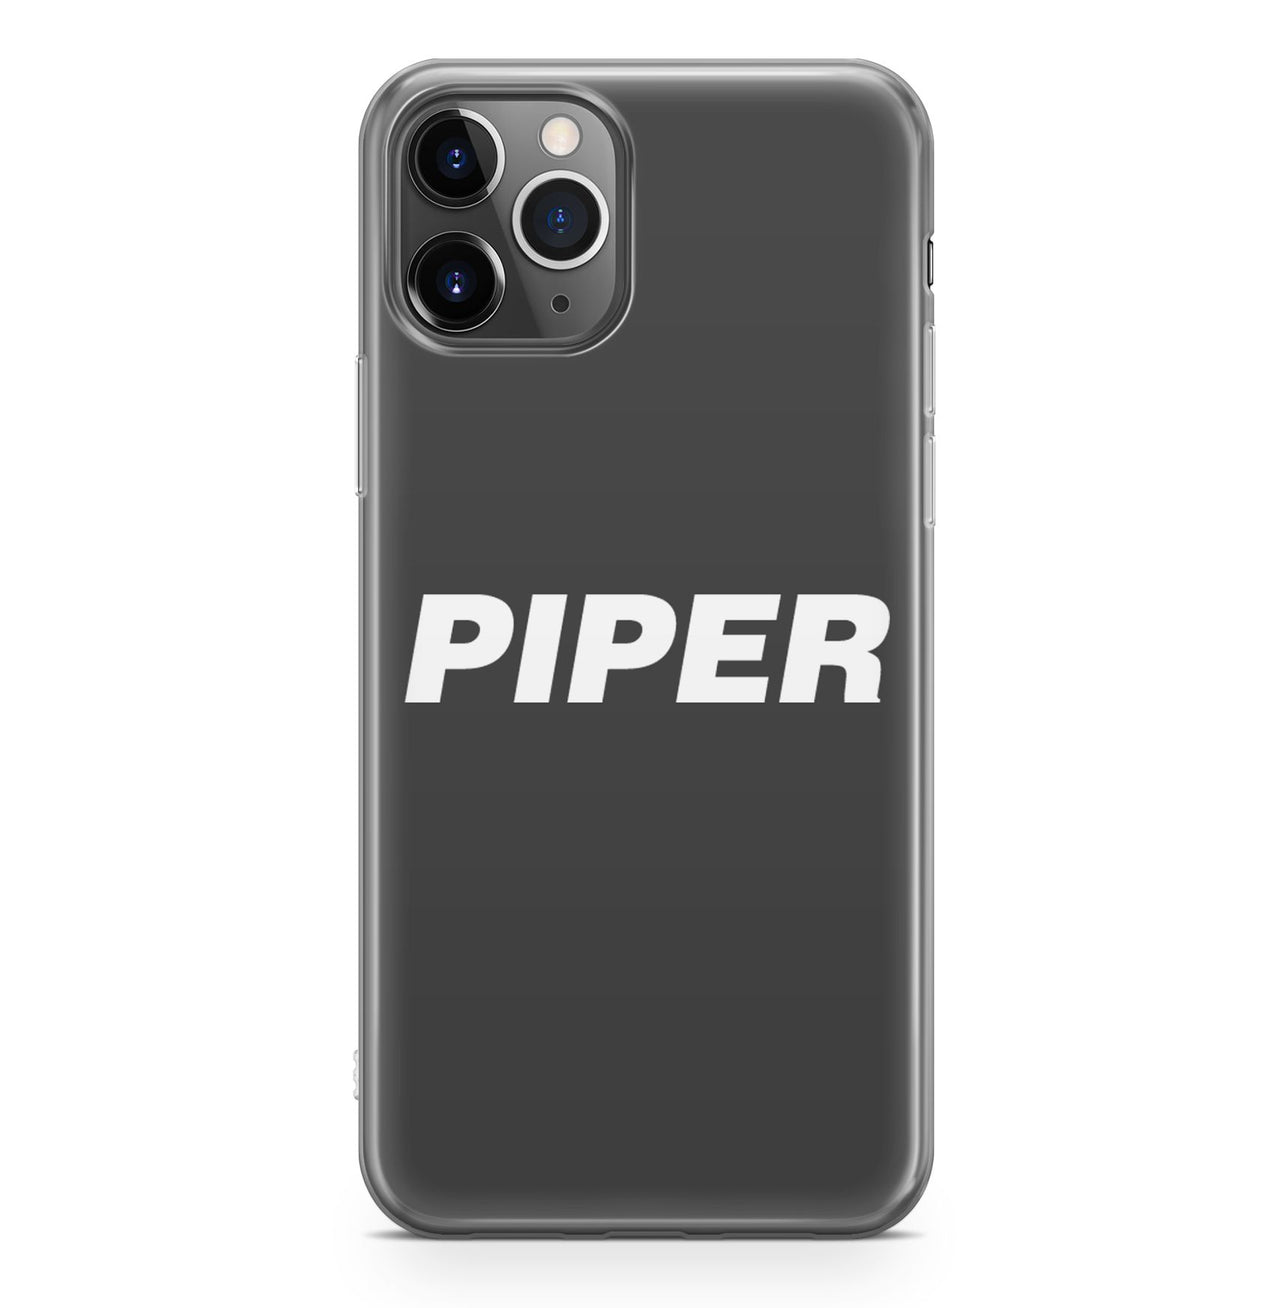 Piper & Text Designed iPhone Cases